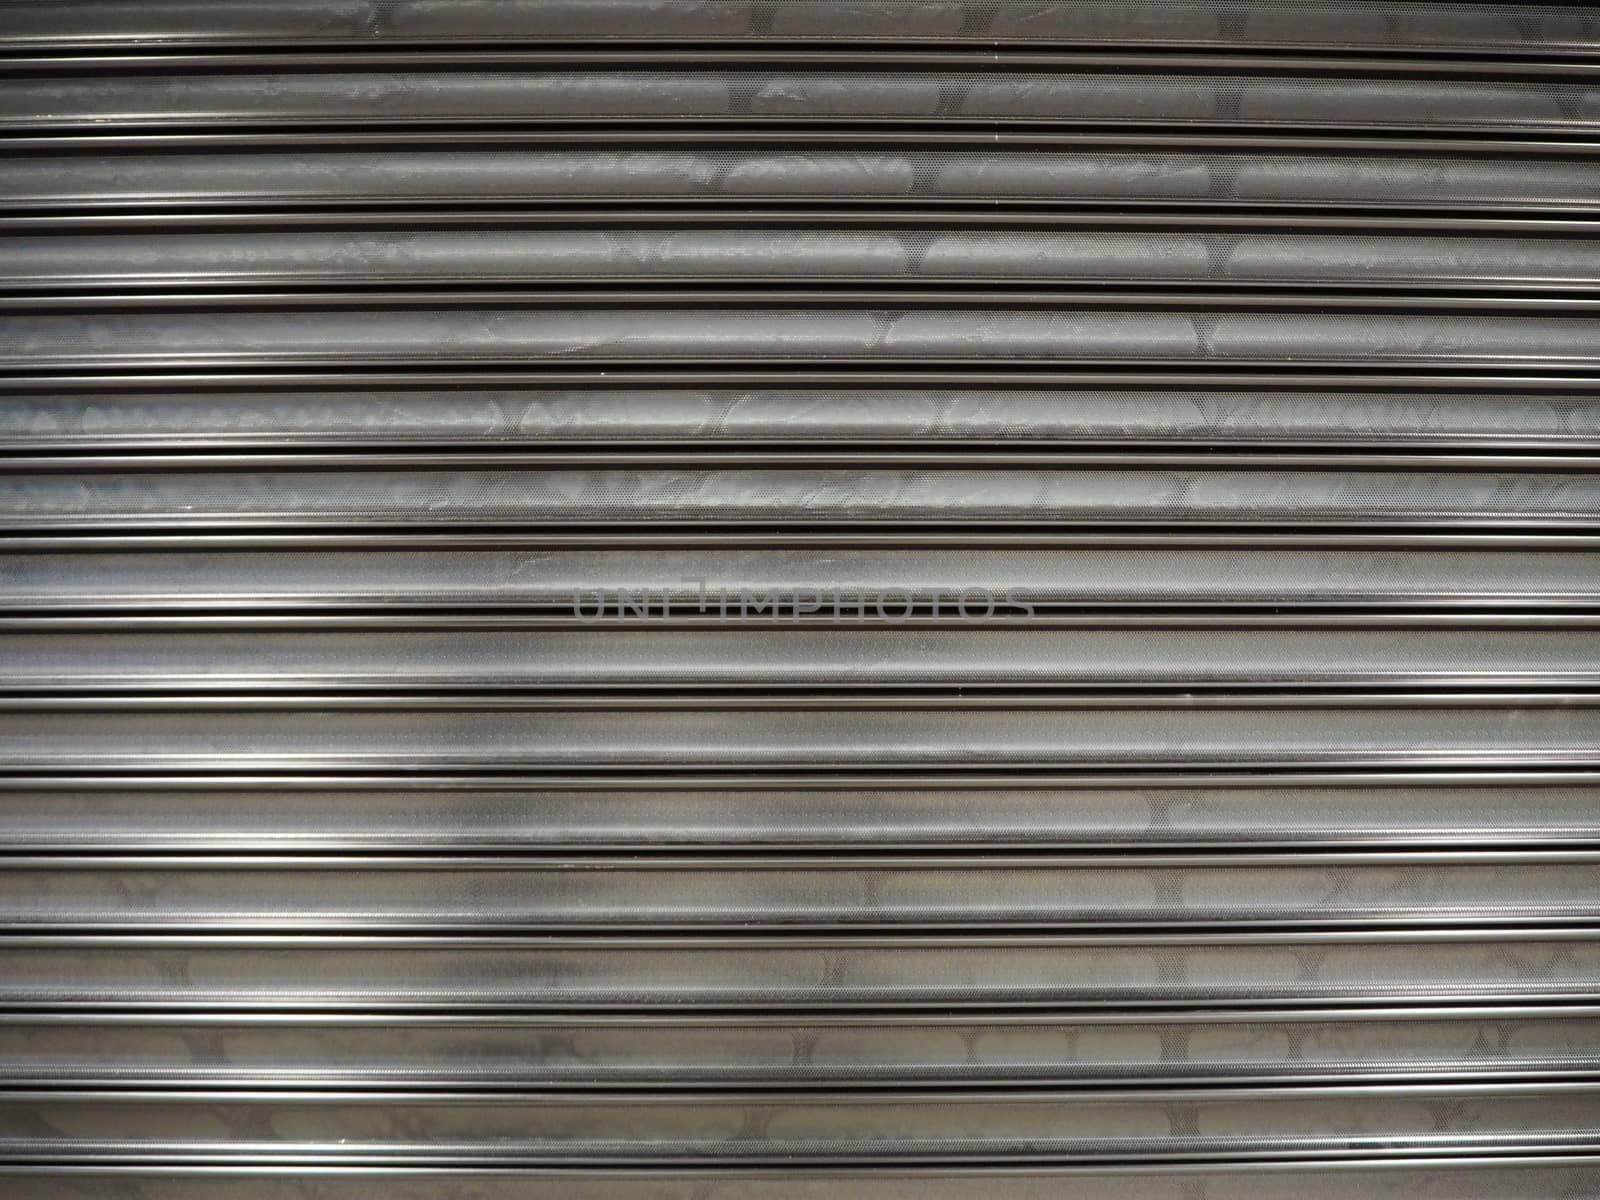 orrugated metal sheet shutter door texture.